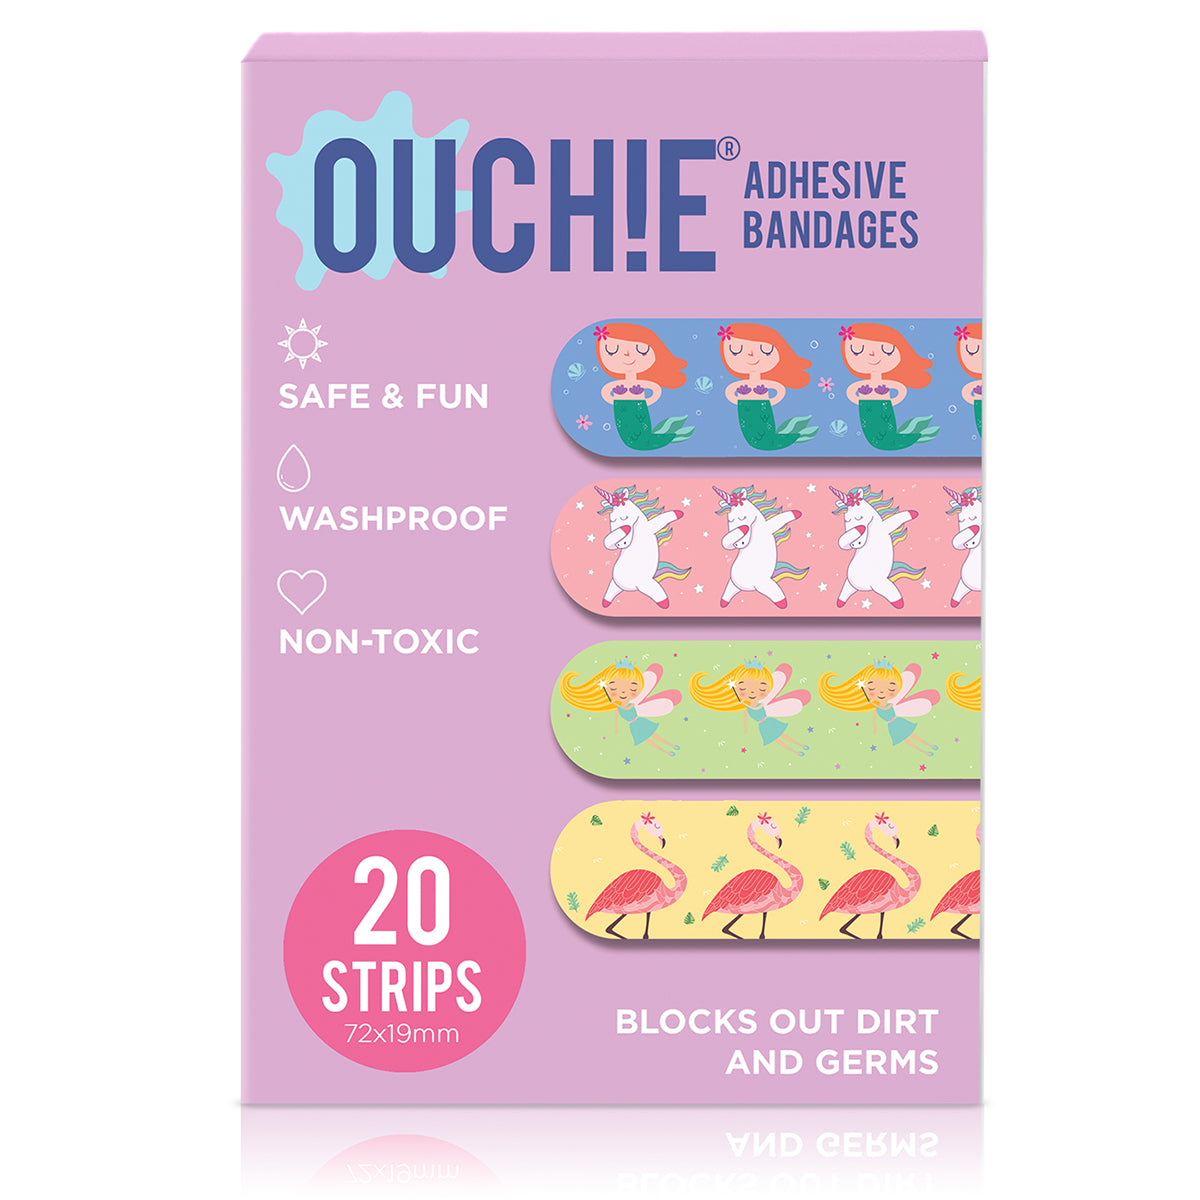 Ouchie Non-Toxic Printed Bandages Quadruple Set (80 Pack)- (PINK, ORANGE, BLUE & LAVENDER)